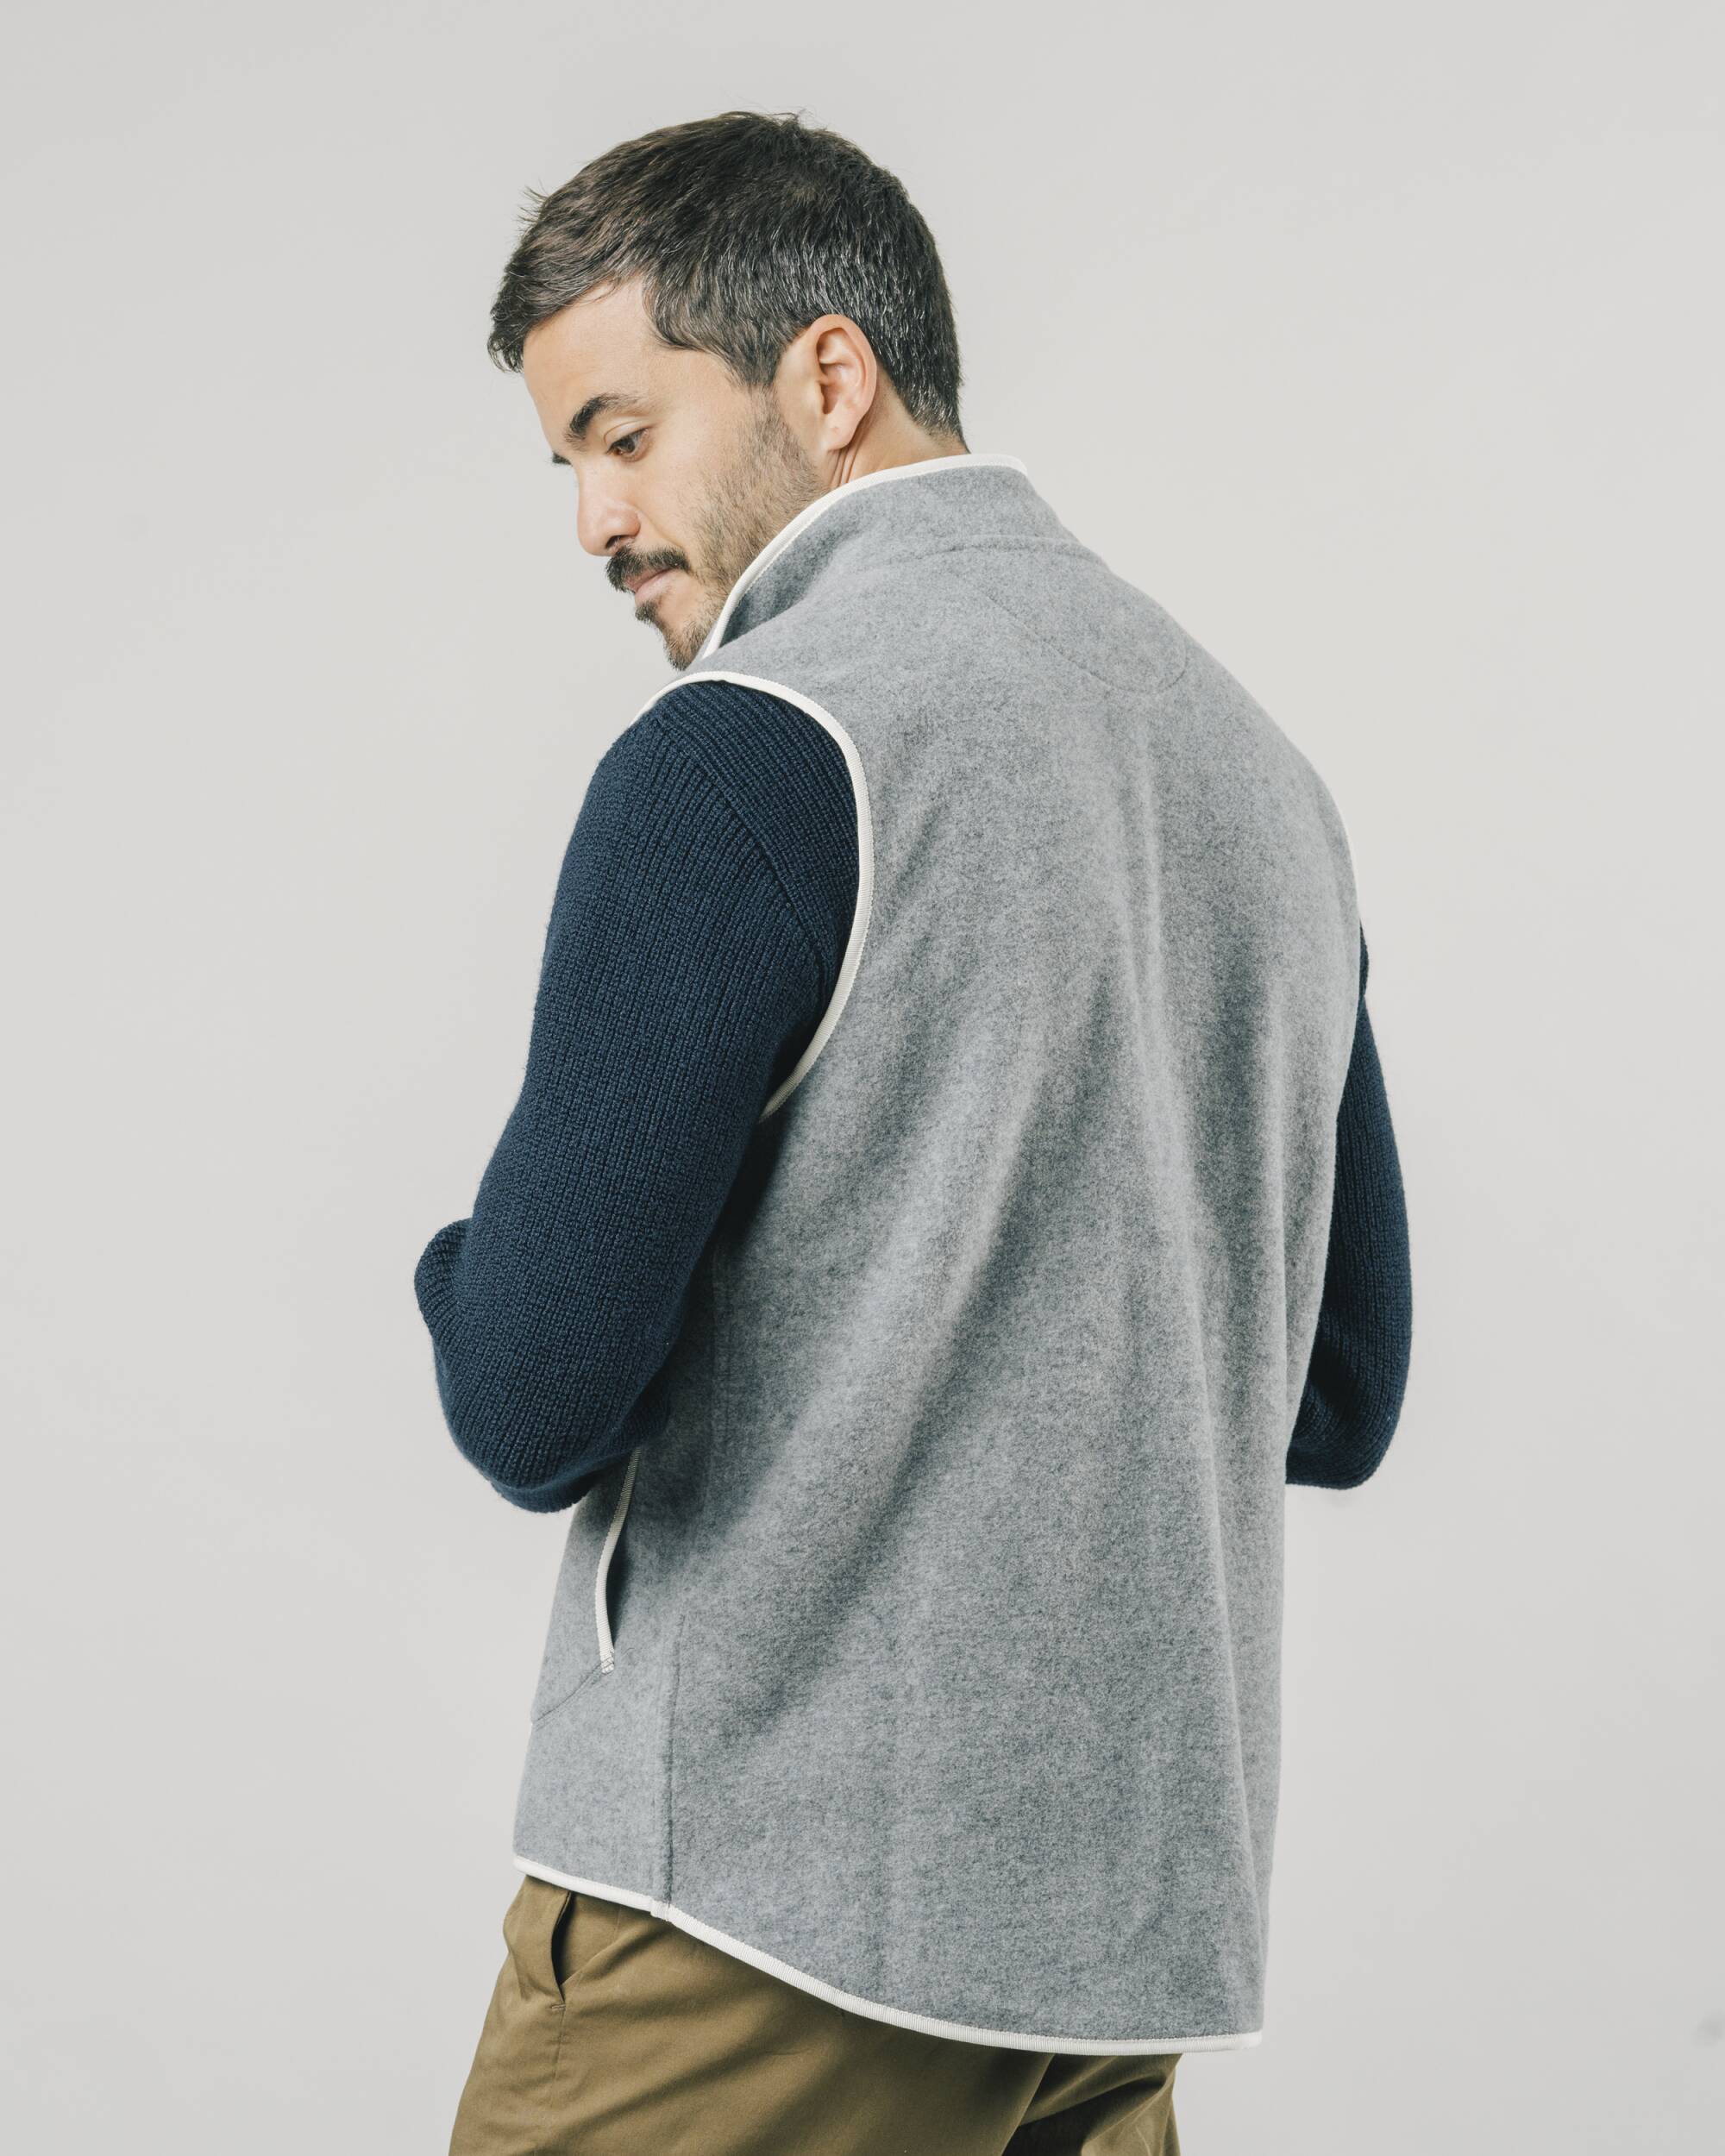 Ibuki vest in gray made from 100% recycled Italian wool from Brava Fabrics